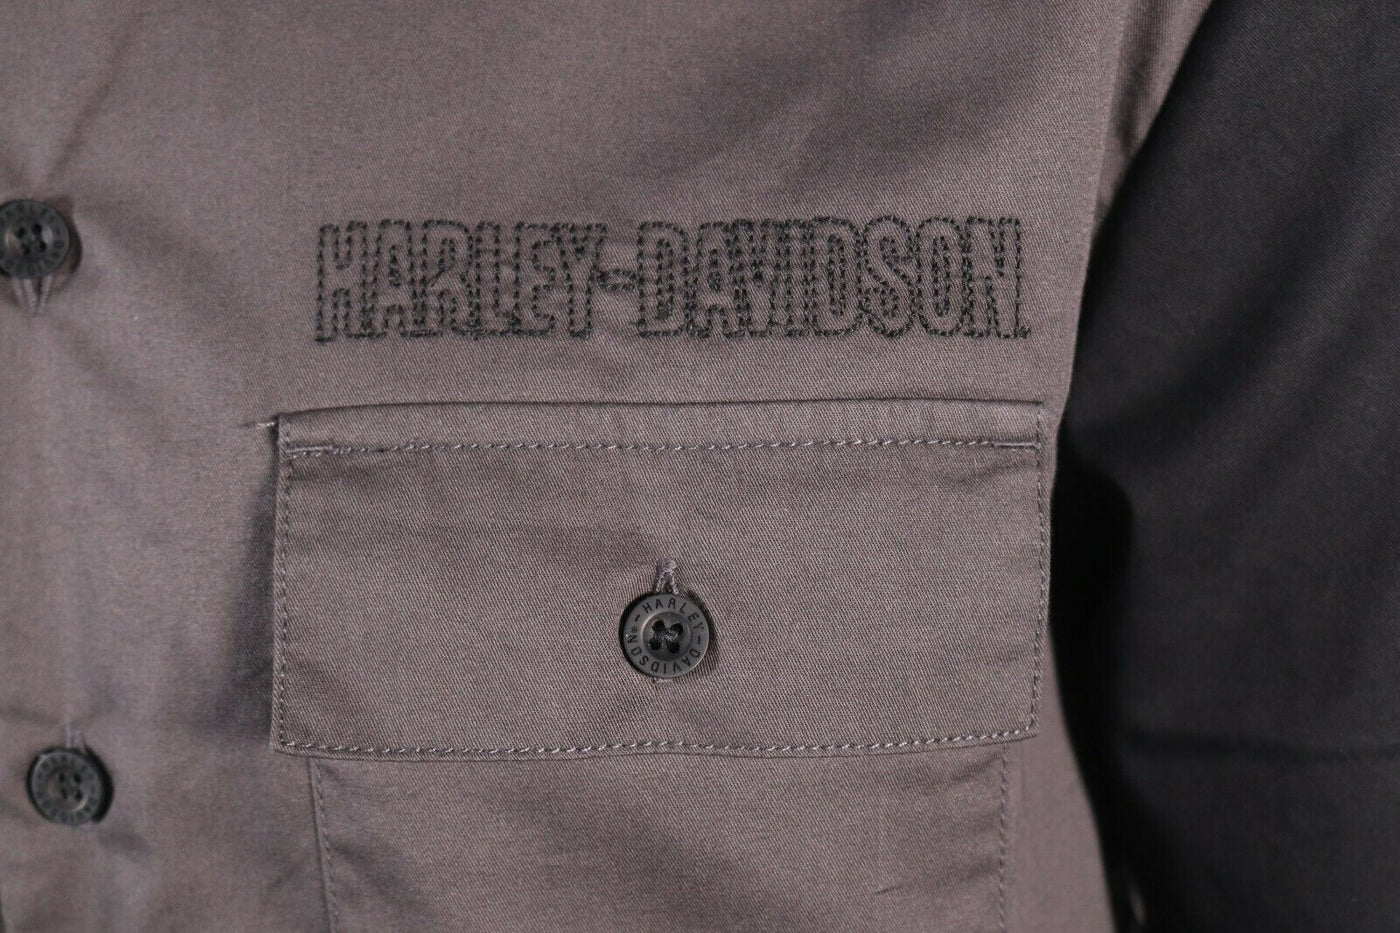 Harley-Davidson Men's Black Collar Chain Stitched Grey S/S Woven Shirt (S32)